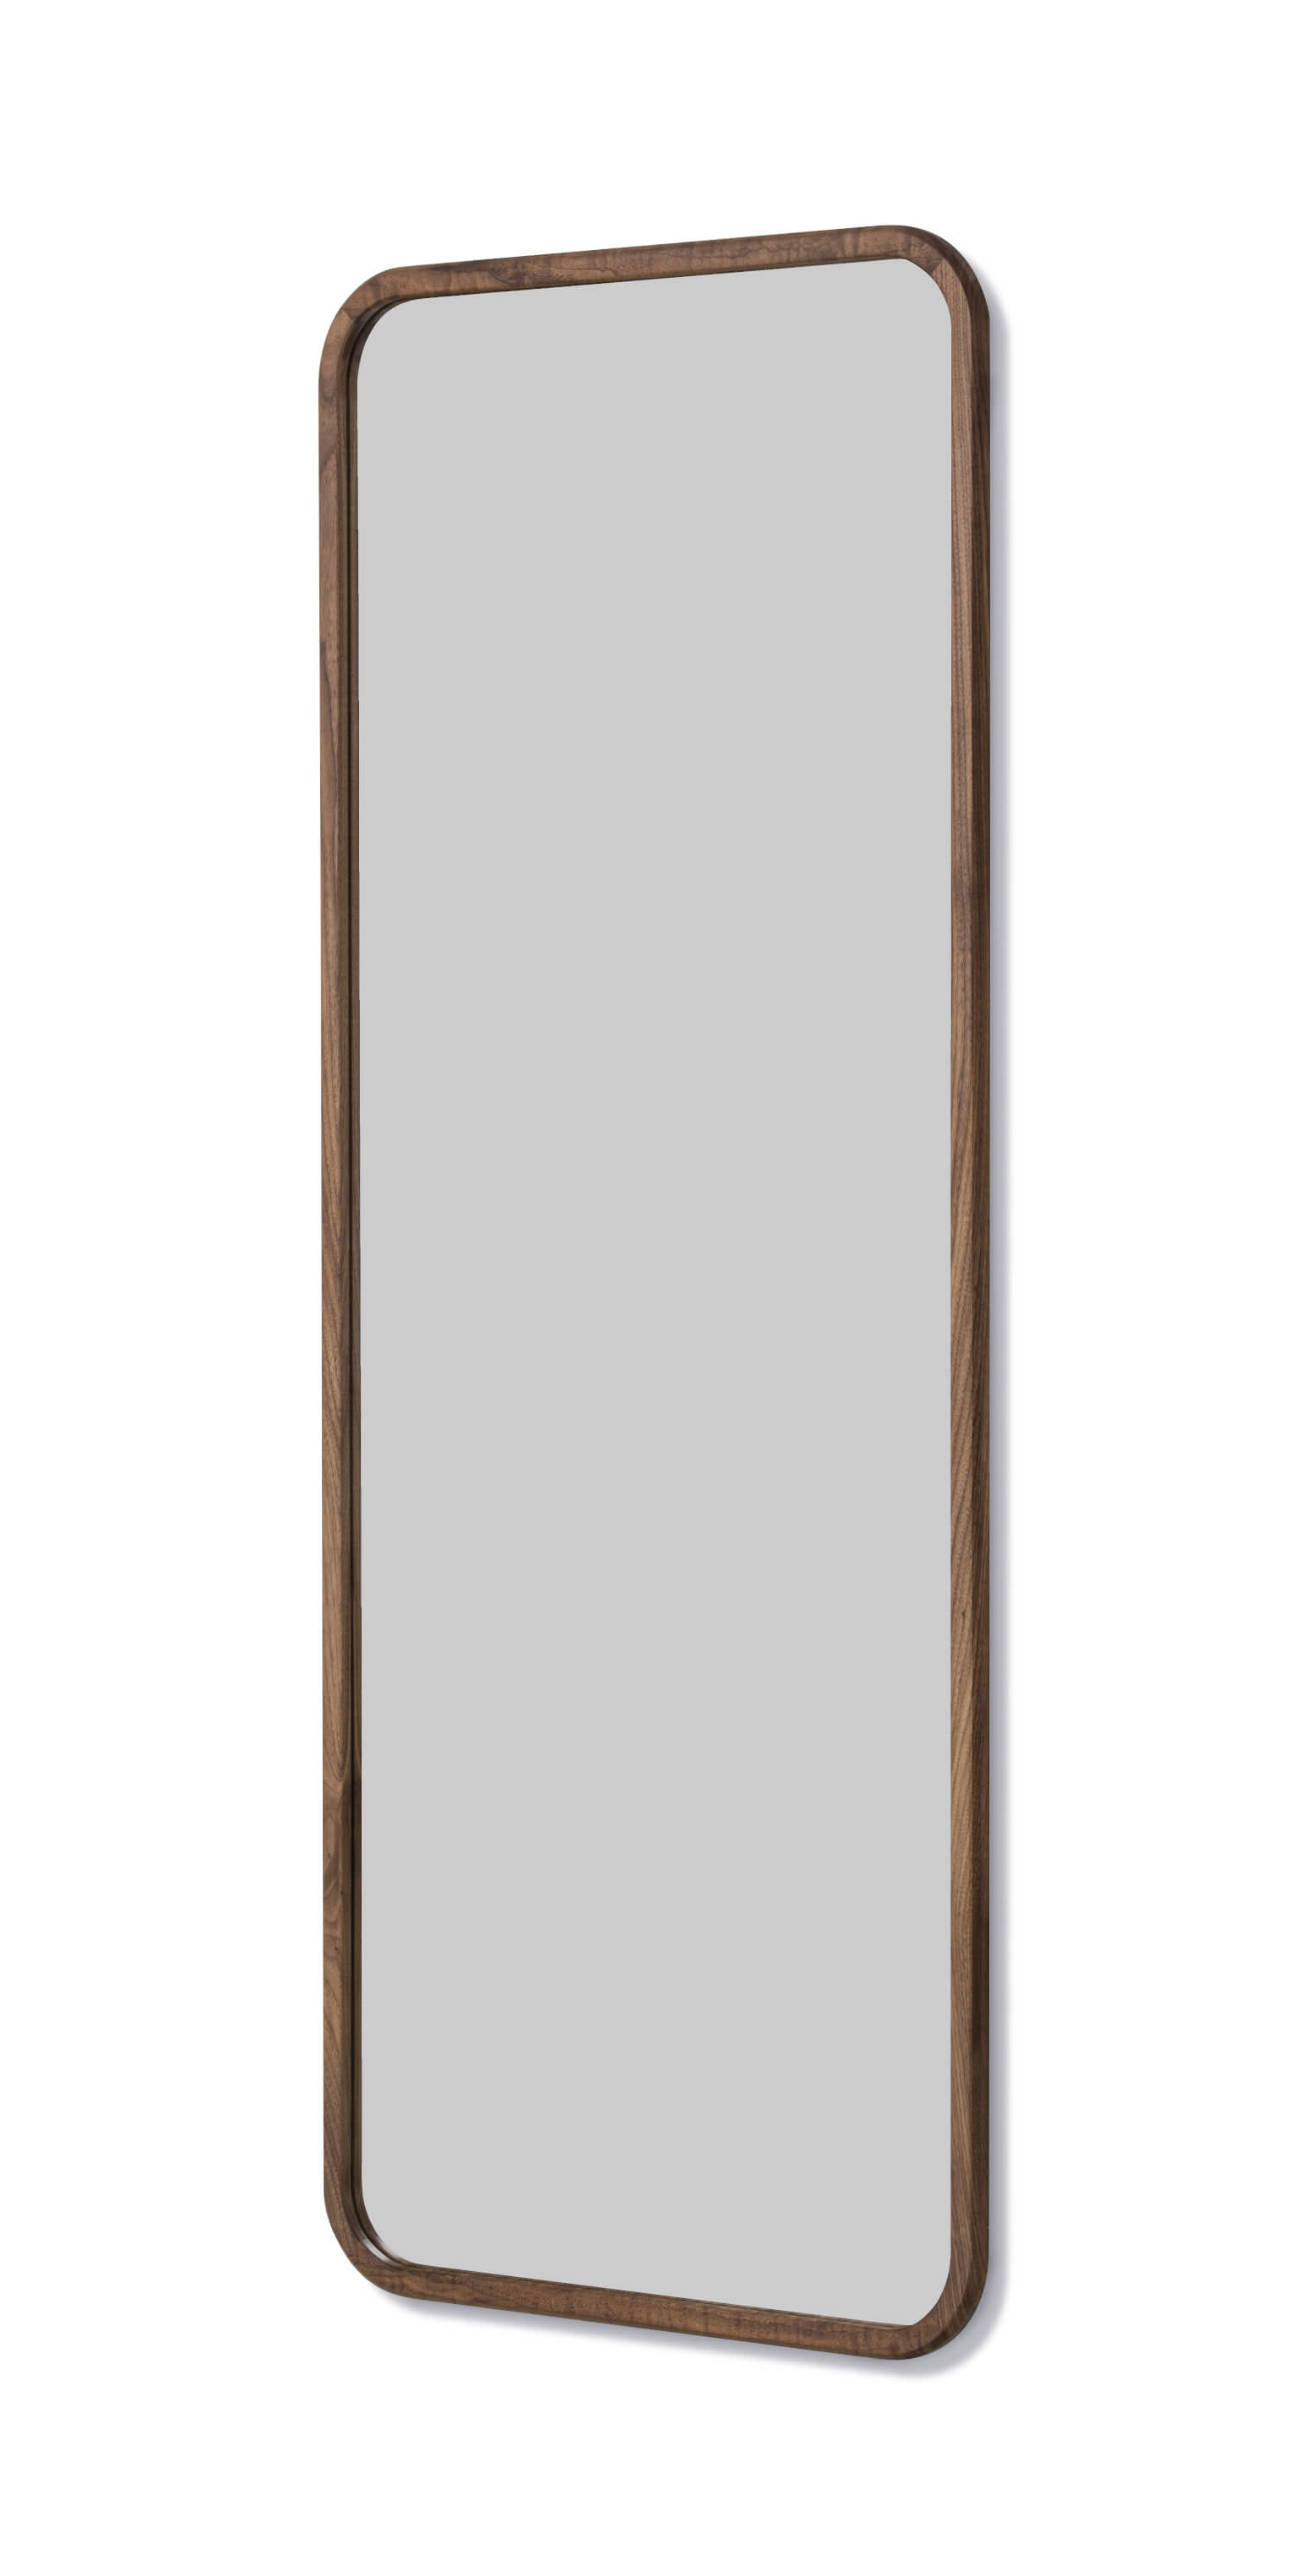 Silhouette Spiegel, 70 x 180 cm, eiche hell geölt